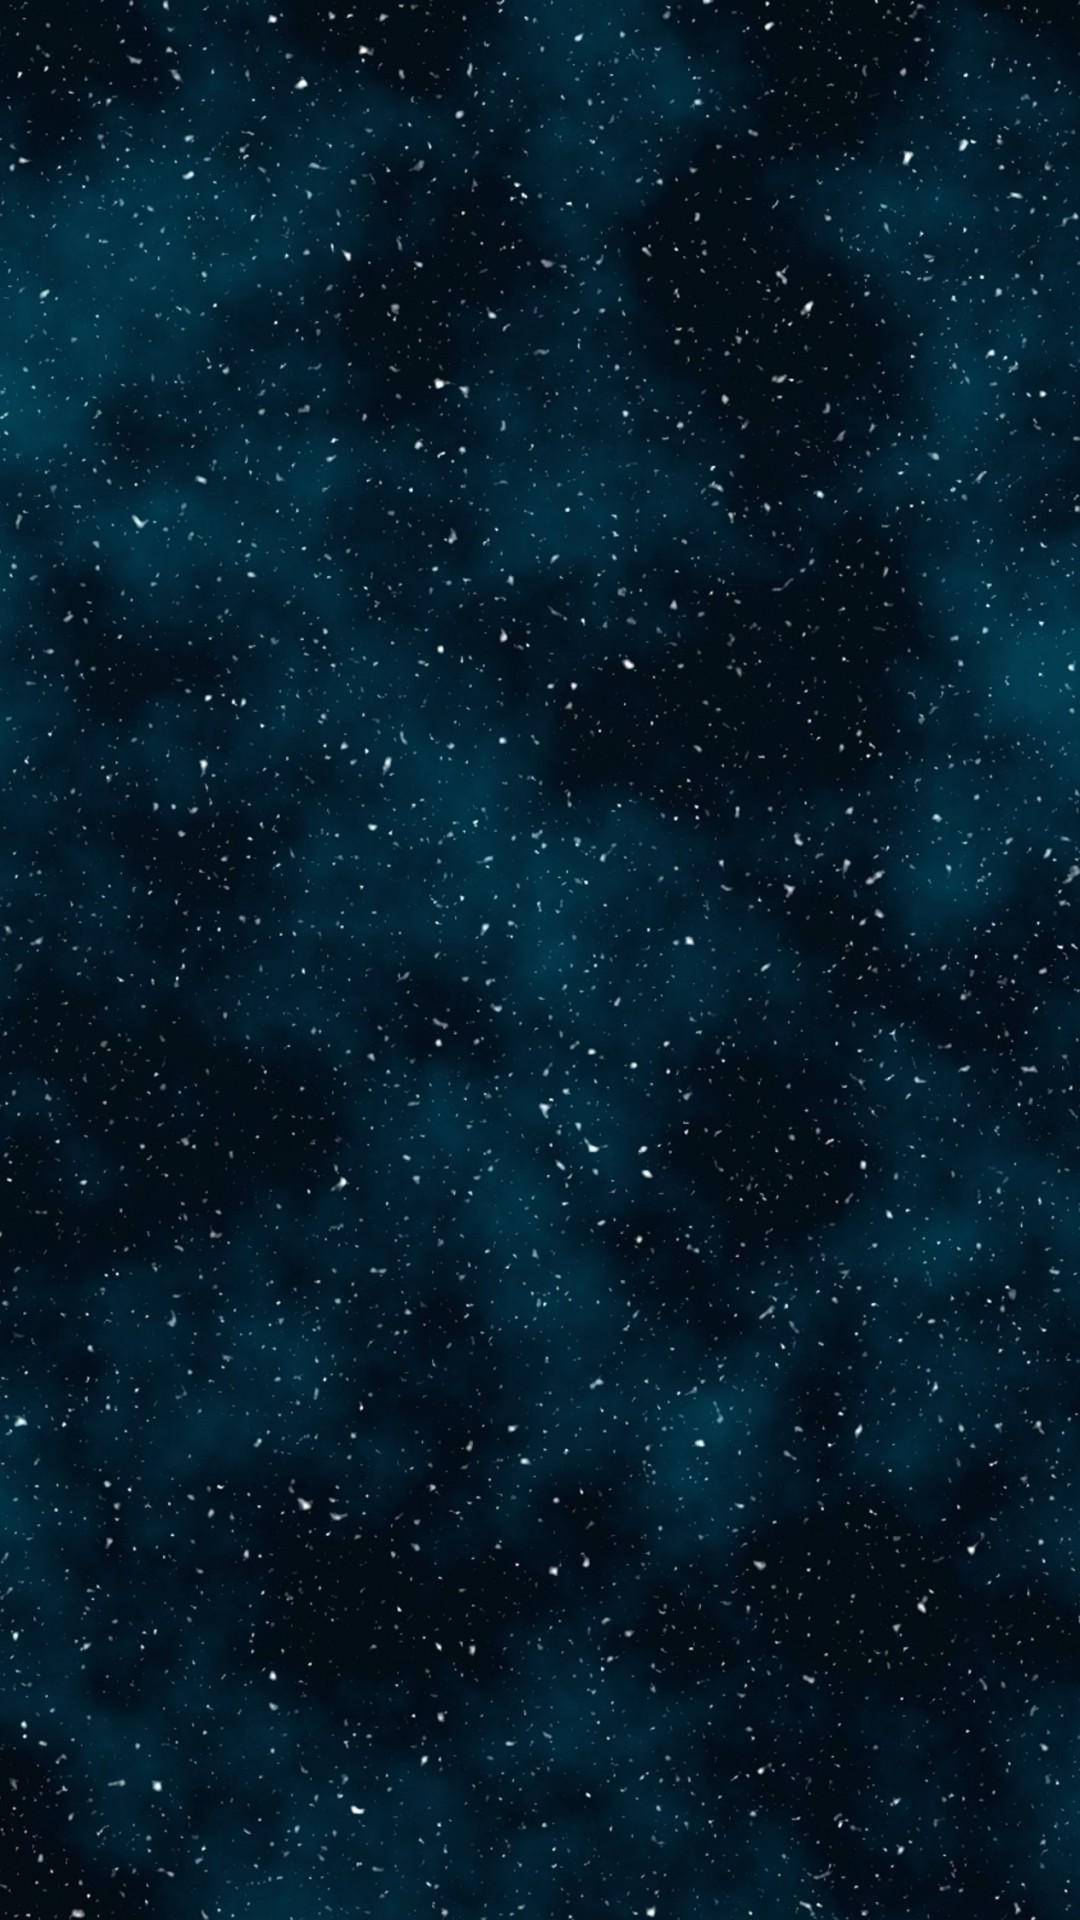 Amazing Starry Night Sky Wallpaper